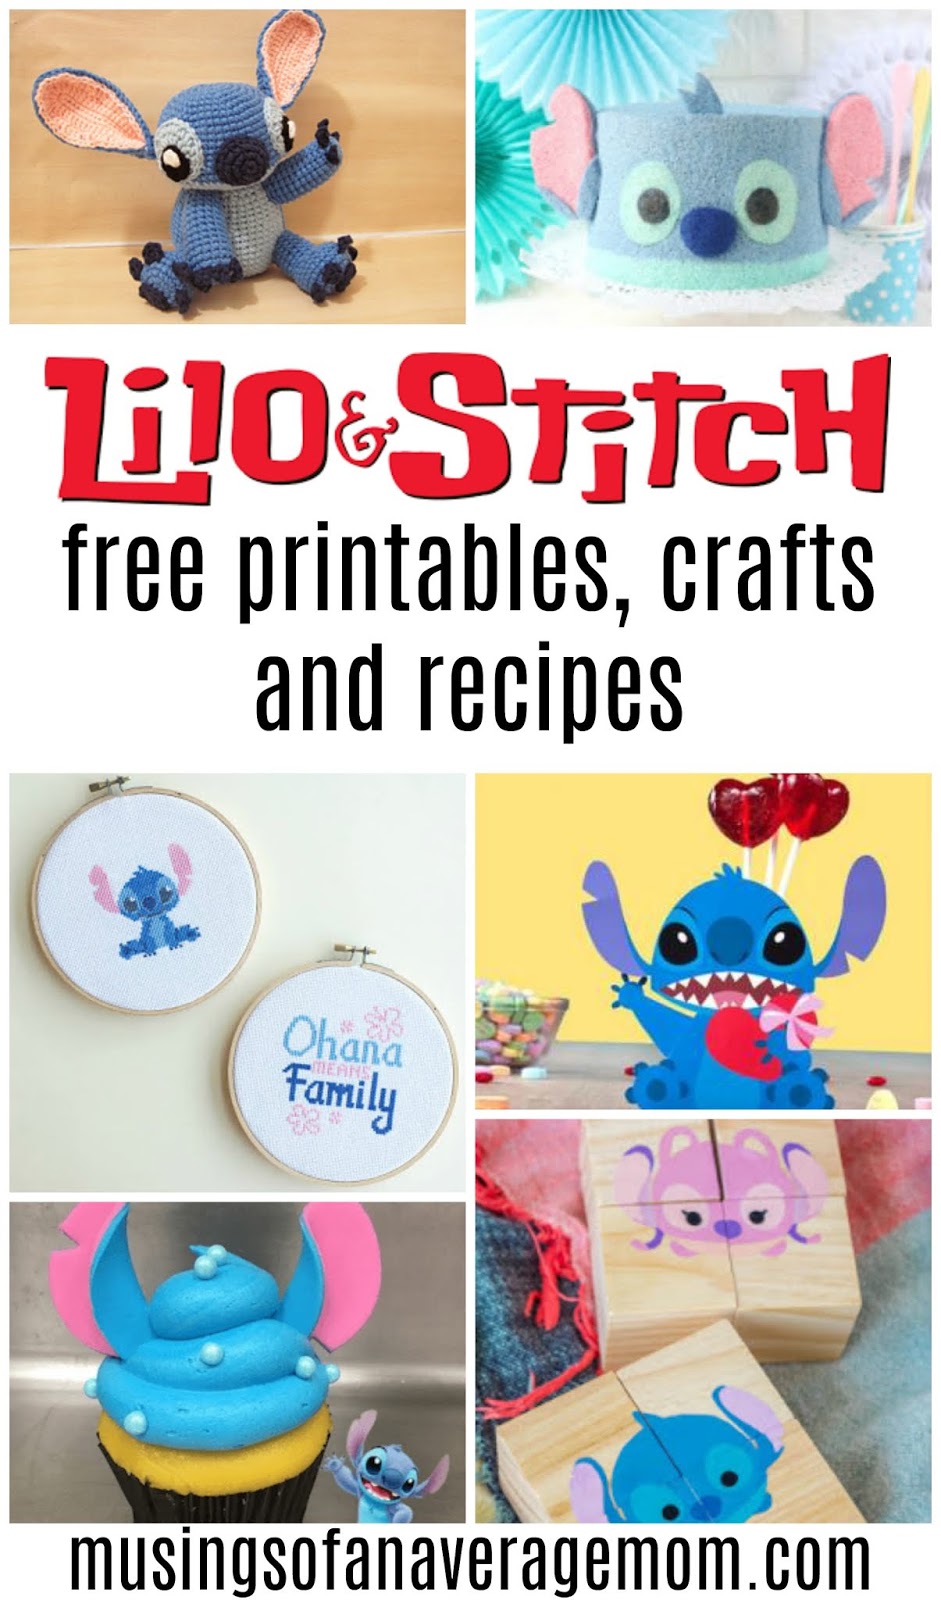 Stitch Birthday Invitation Template, Stitch Invite video, Stitch Party